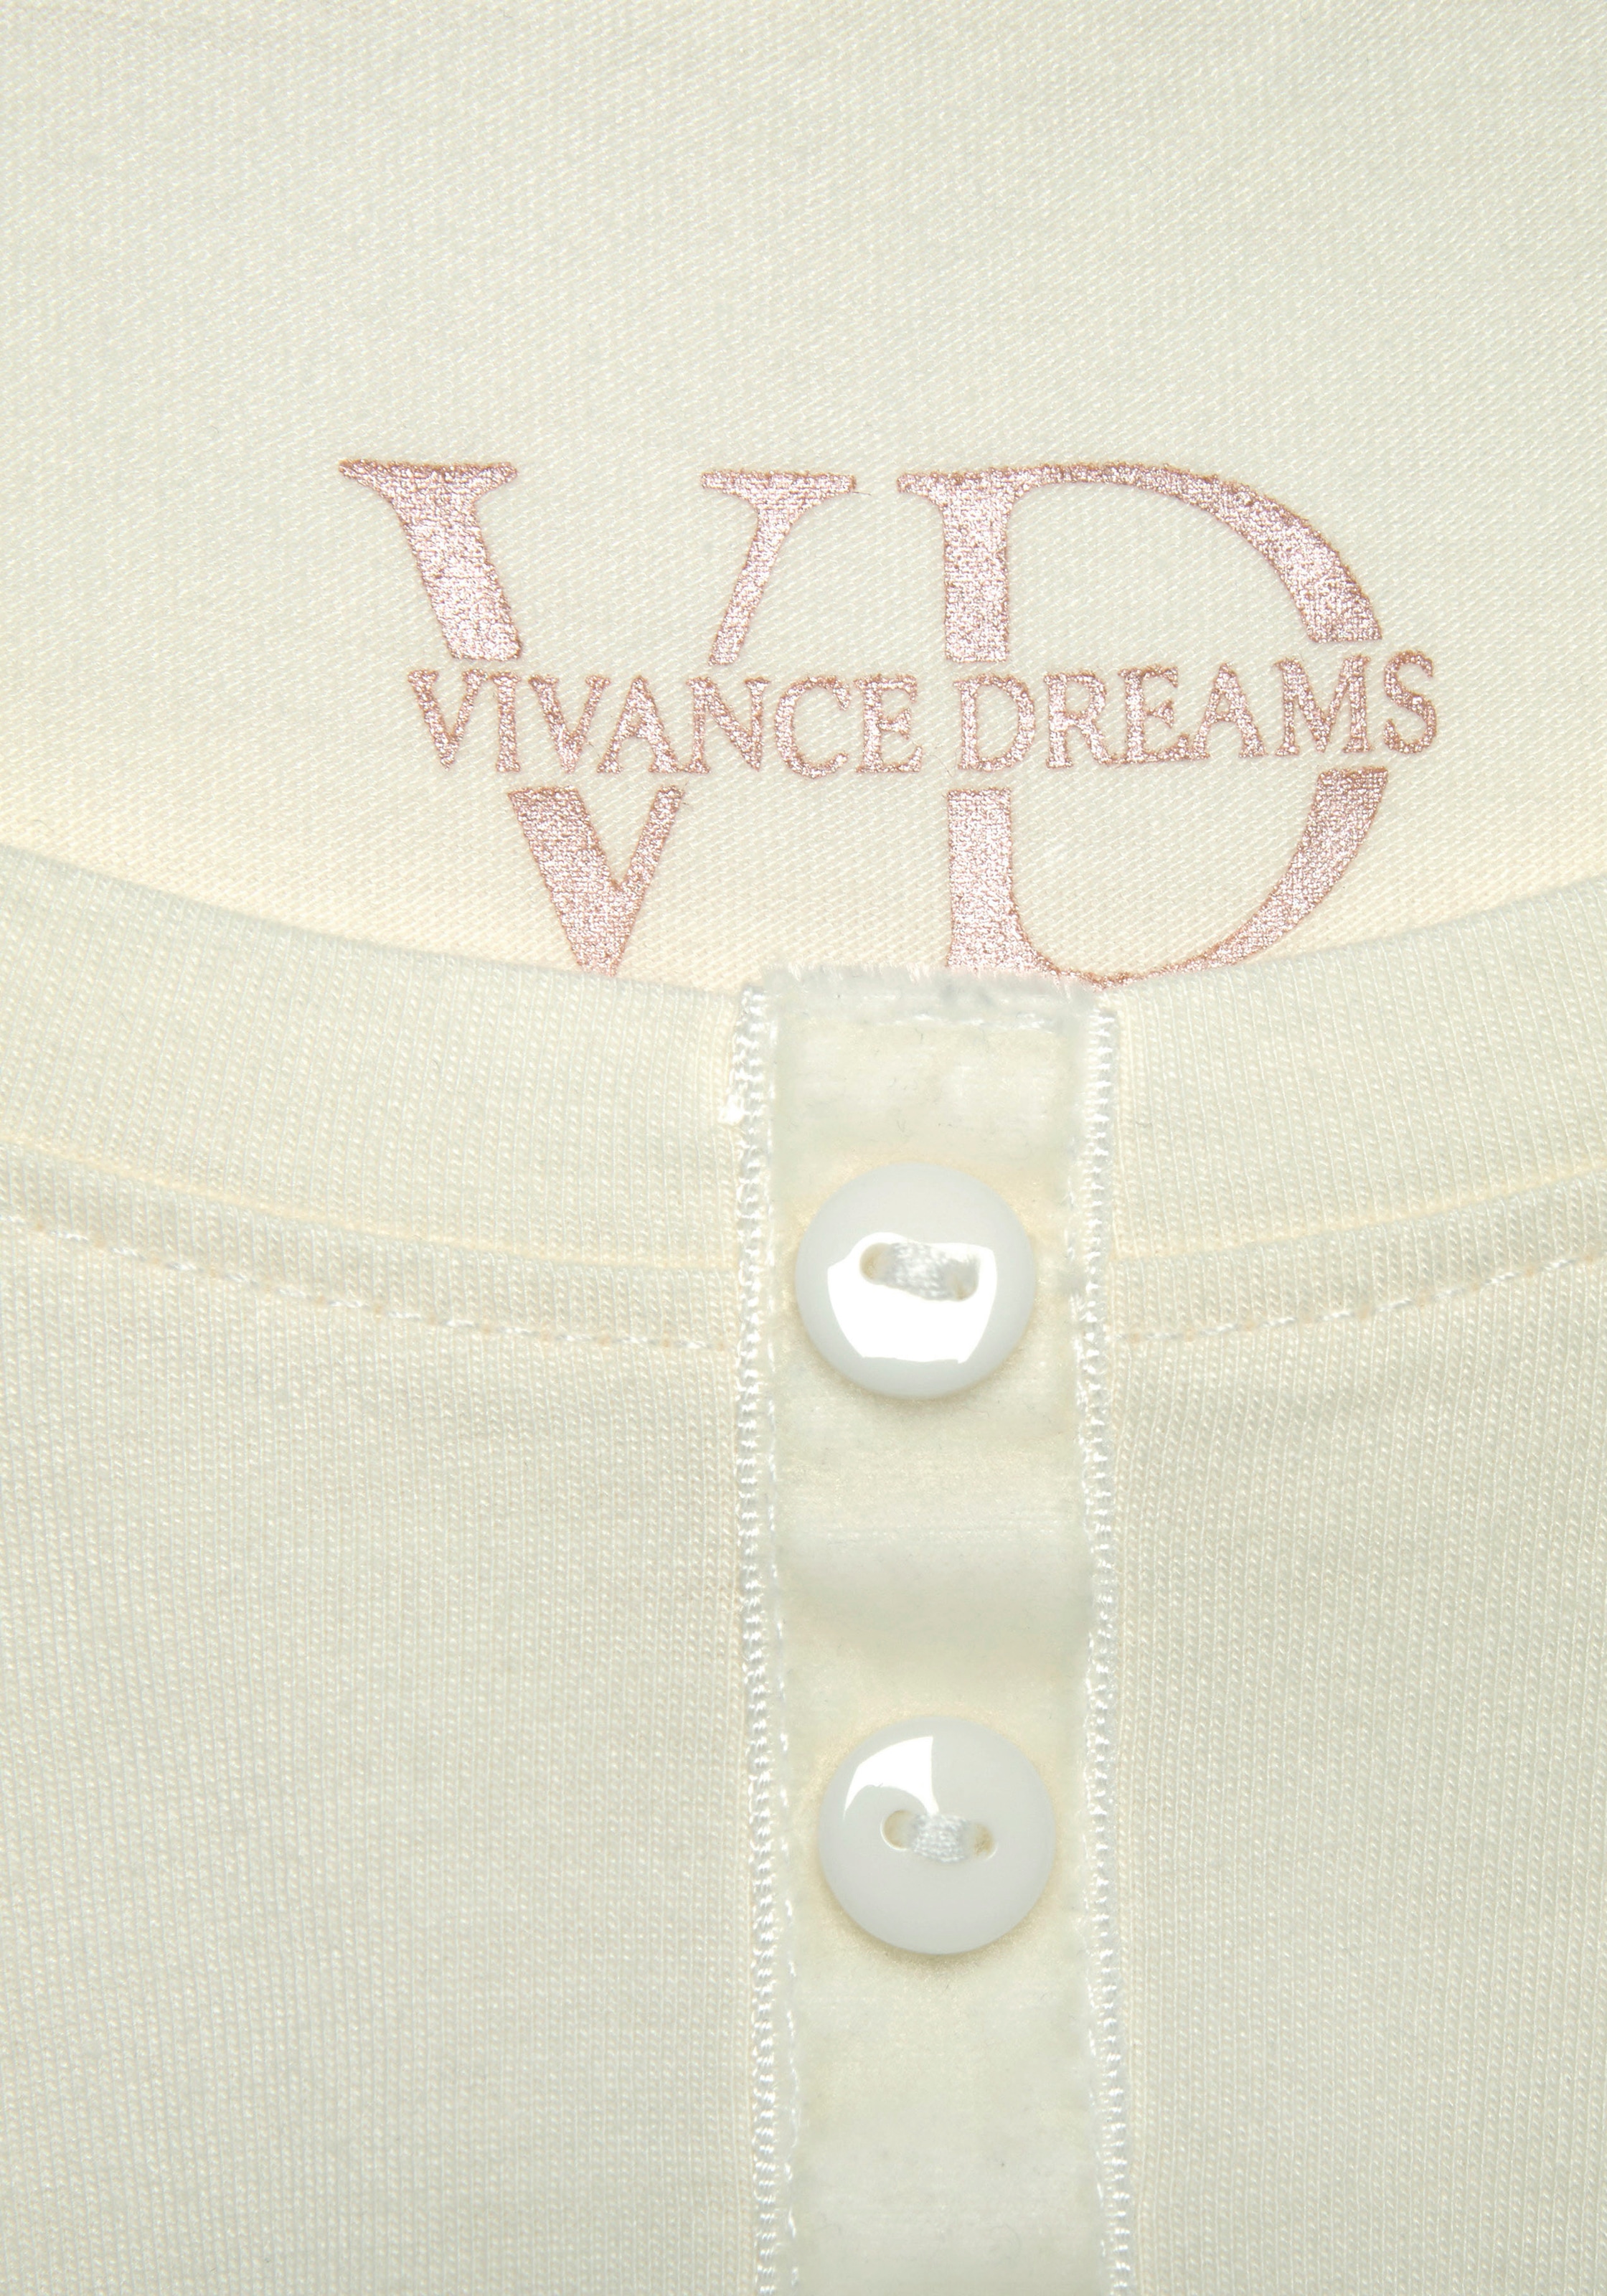 Vivance Dreams Pyjamaoberteil, mit Velvet-Knopfleiste